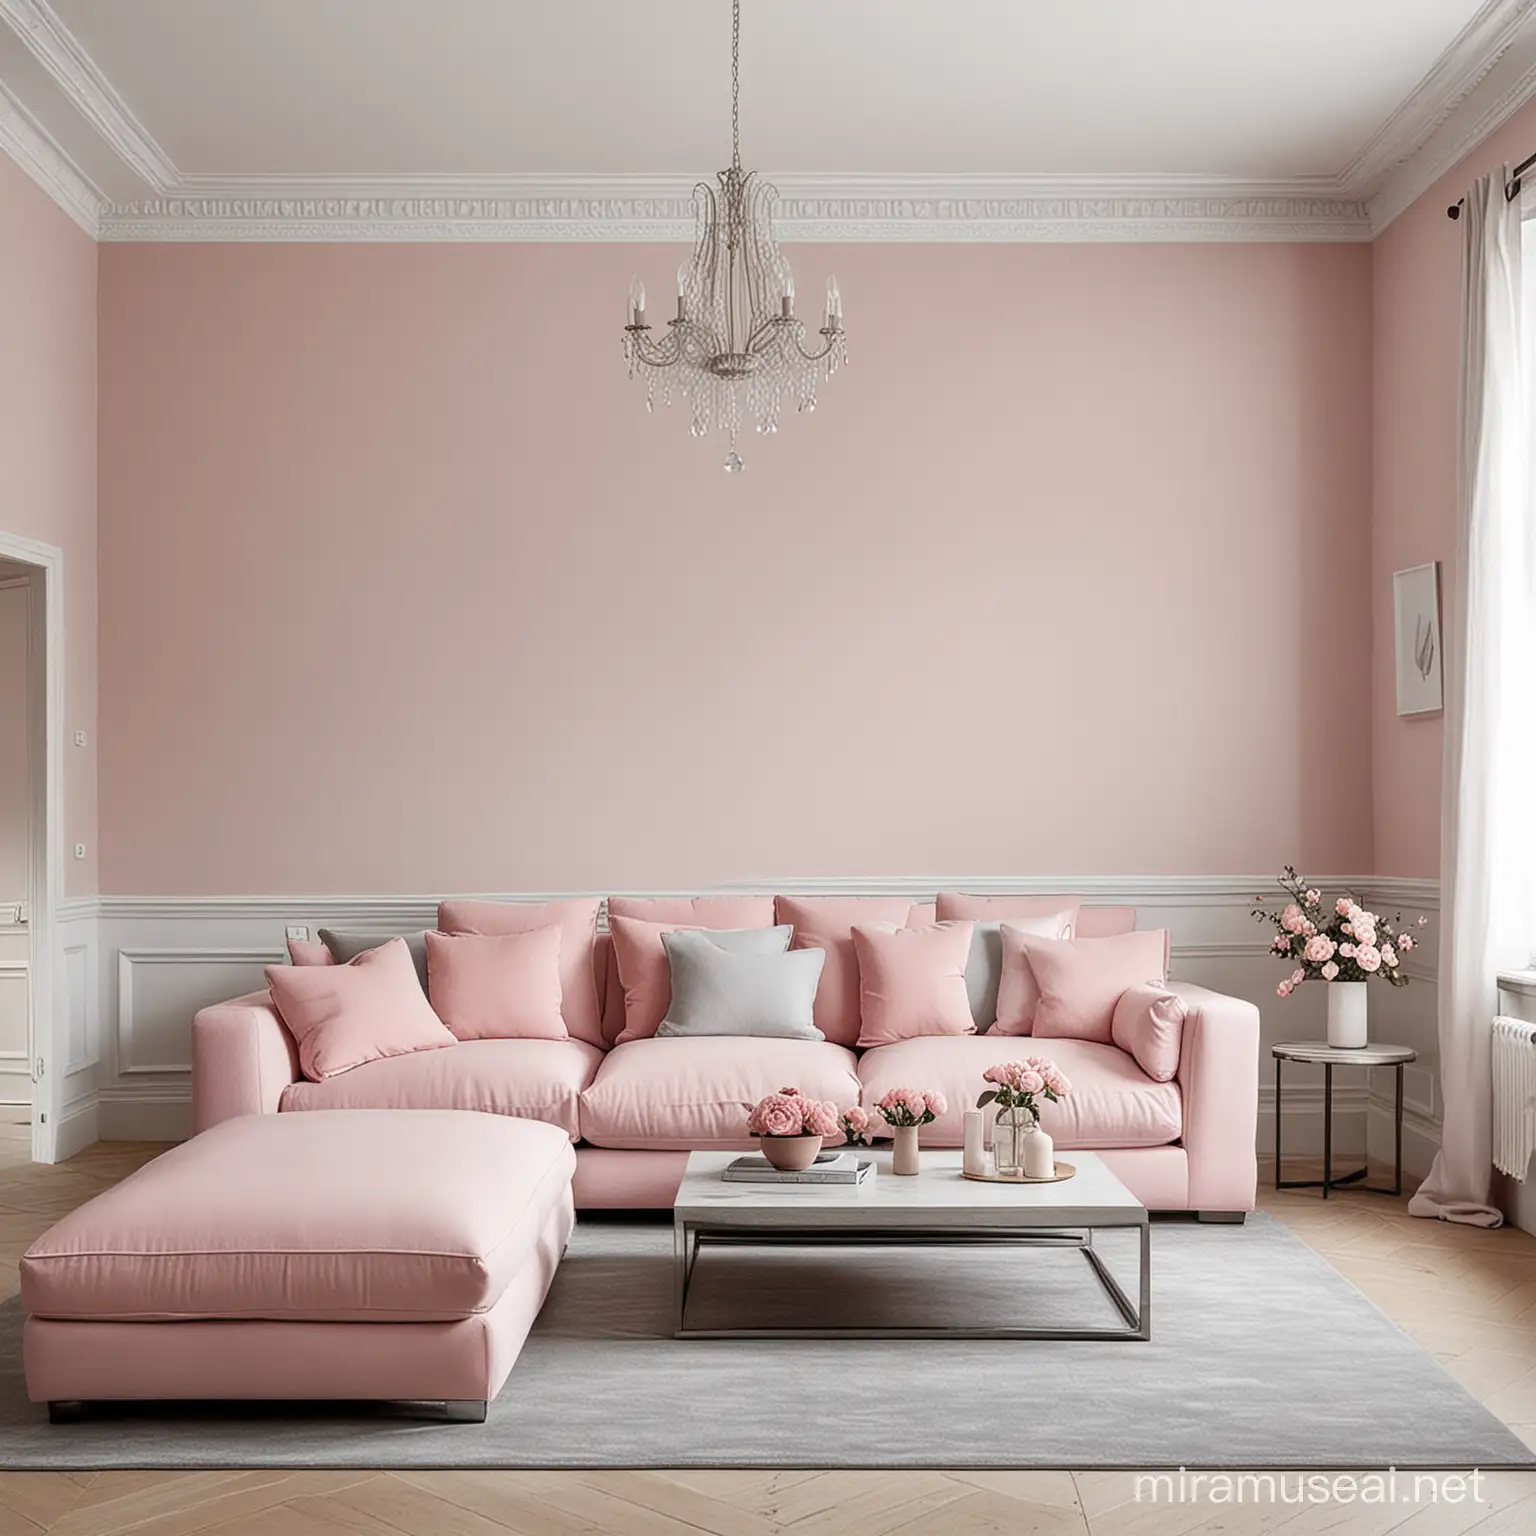 Soft Pink and Light Gray interior